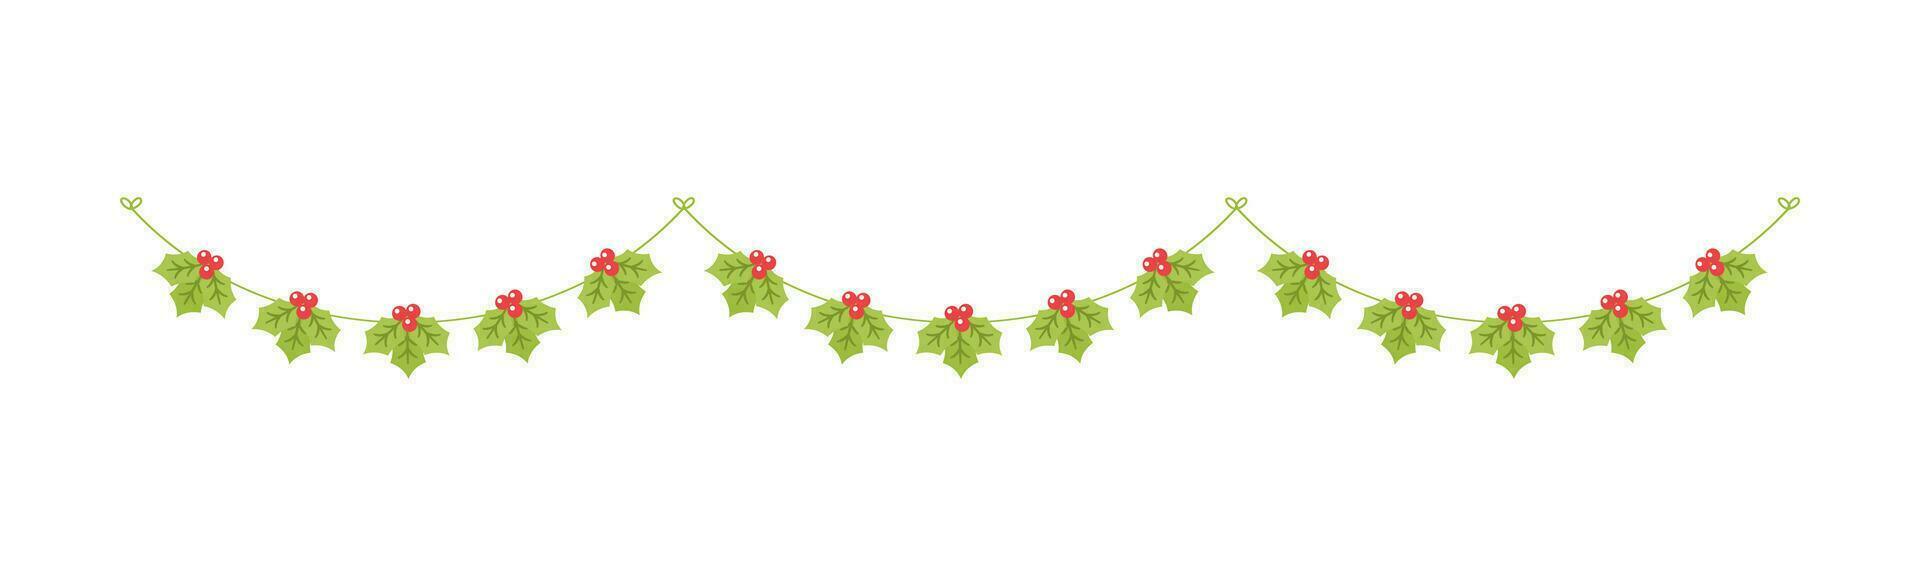 Hanging Mistletoe Garland Vector Illustration, Christmas Graphics Festive Winter Holiday Season Bunting